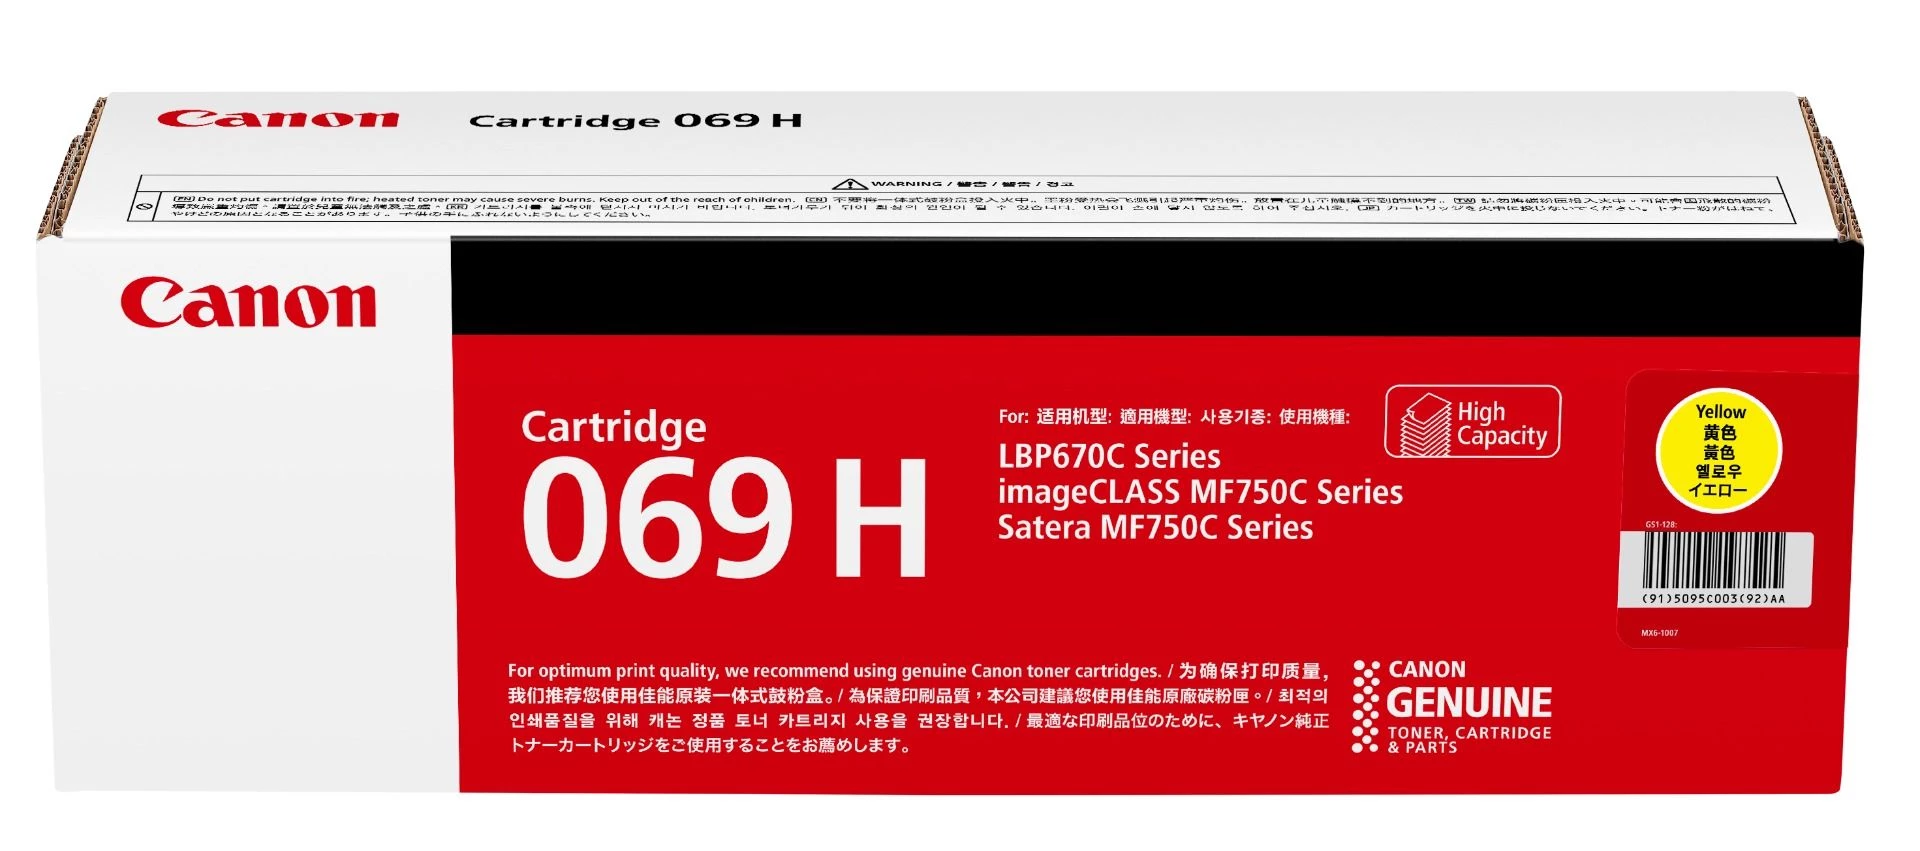 Canon Cartridge 069H Y Yellow Toner Cartridge (High Capacity)